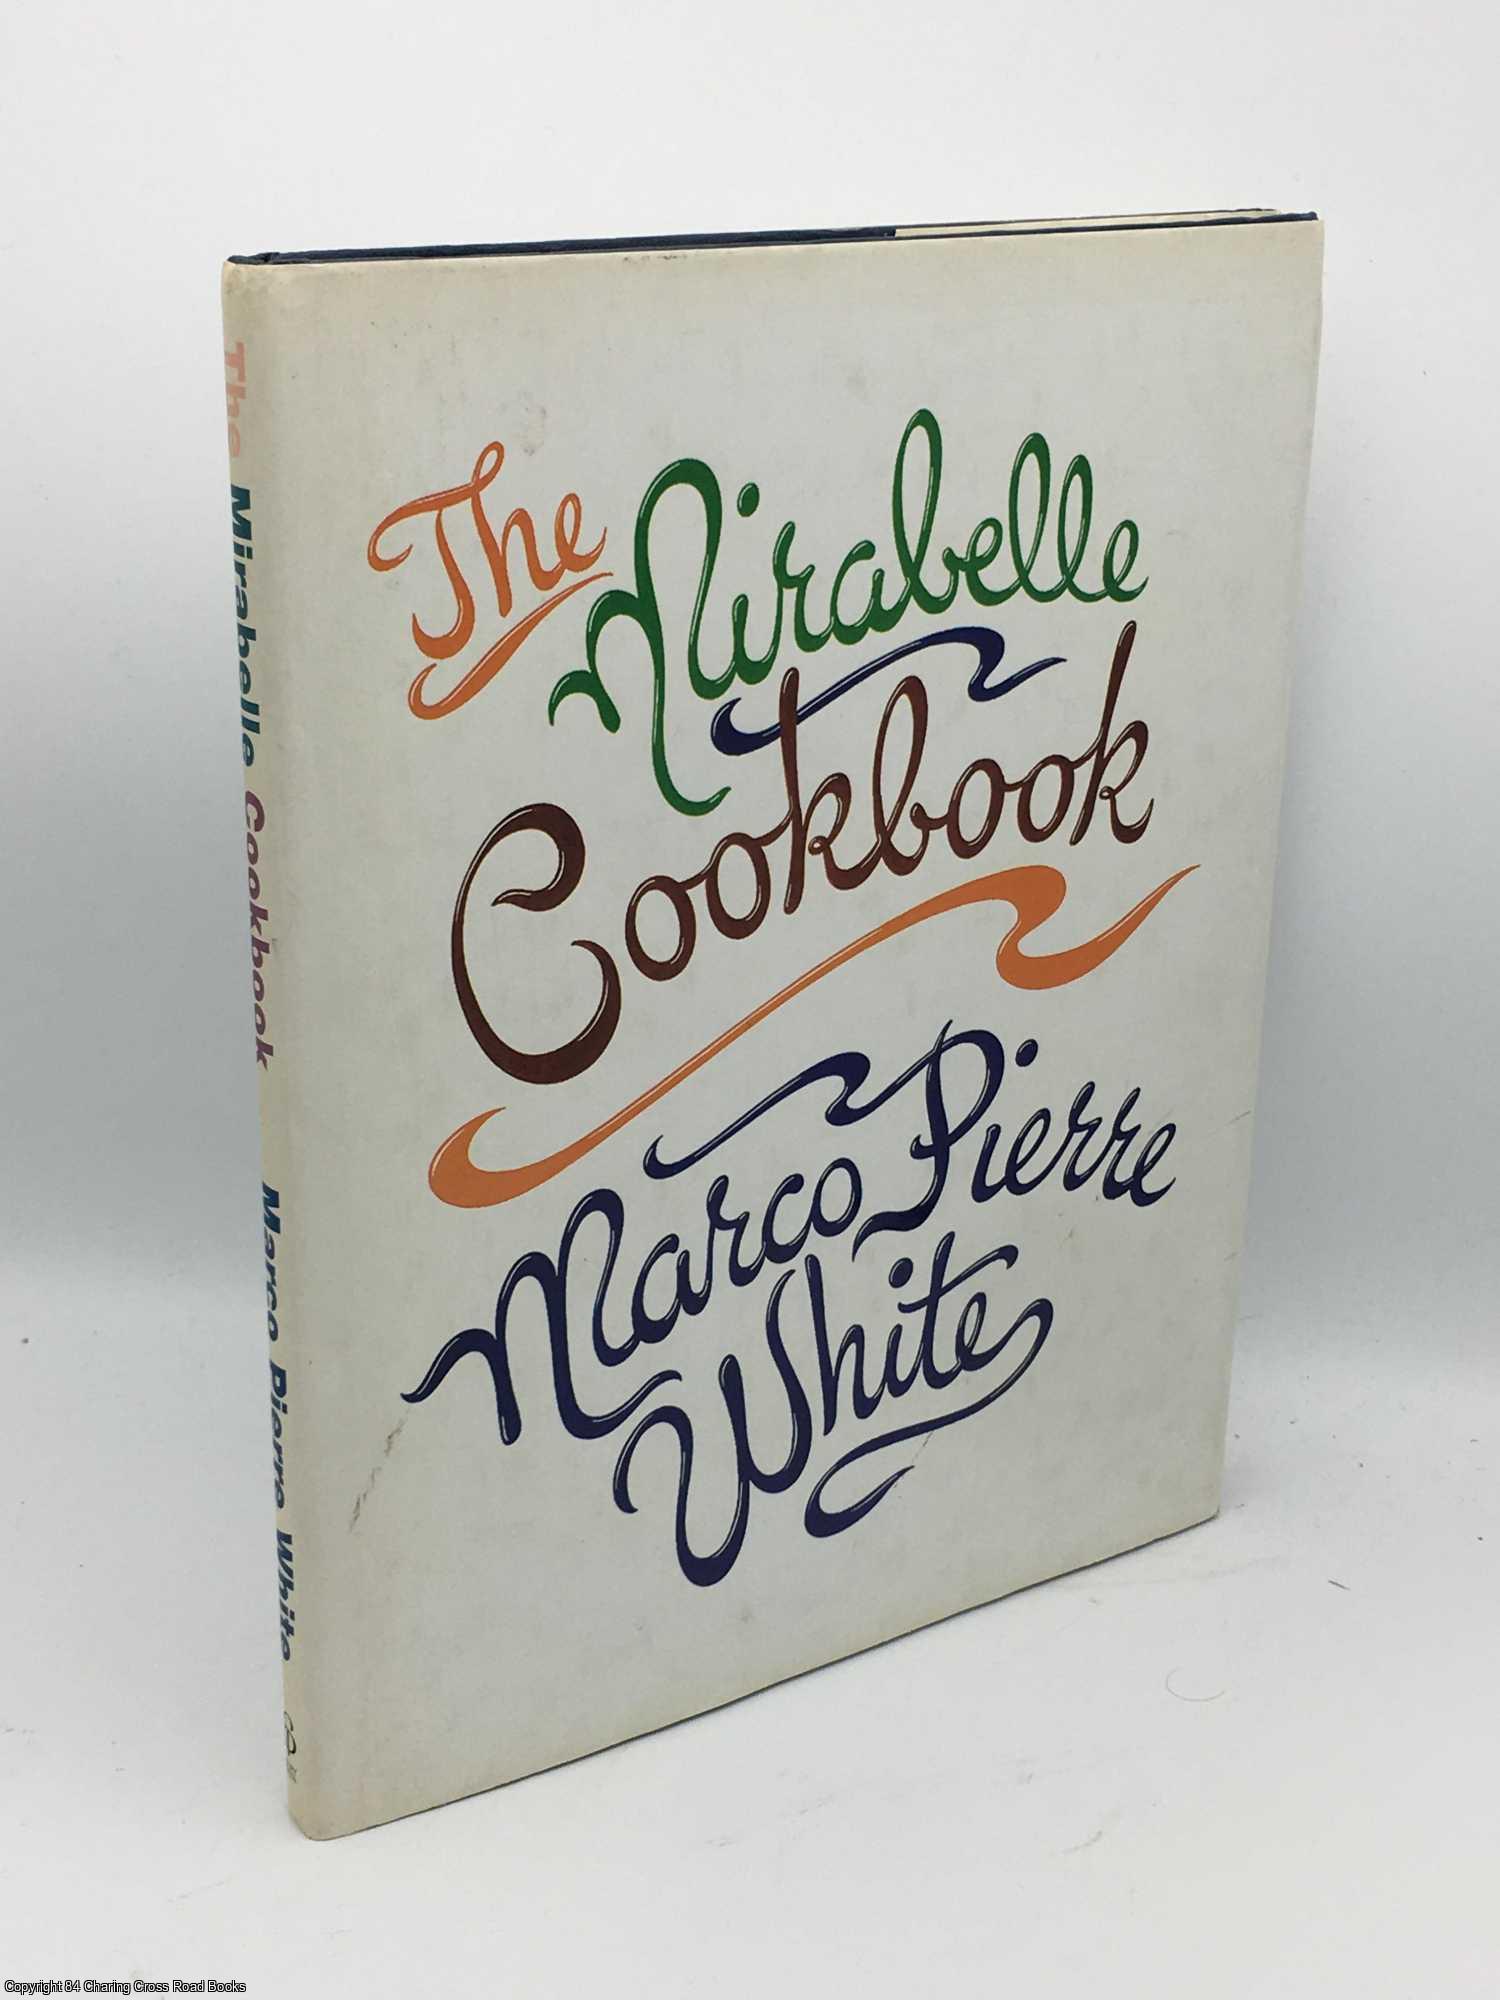 White, Marco Pierre - Mirabelle Cookbook